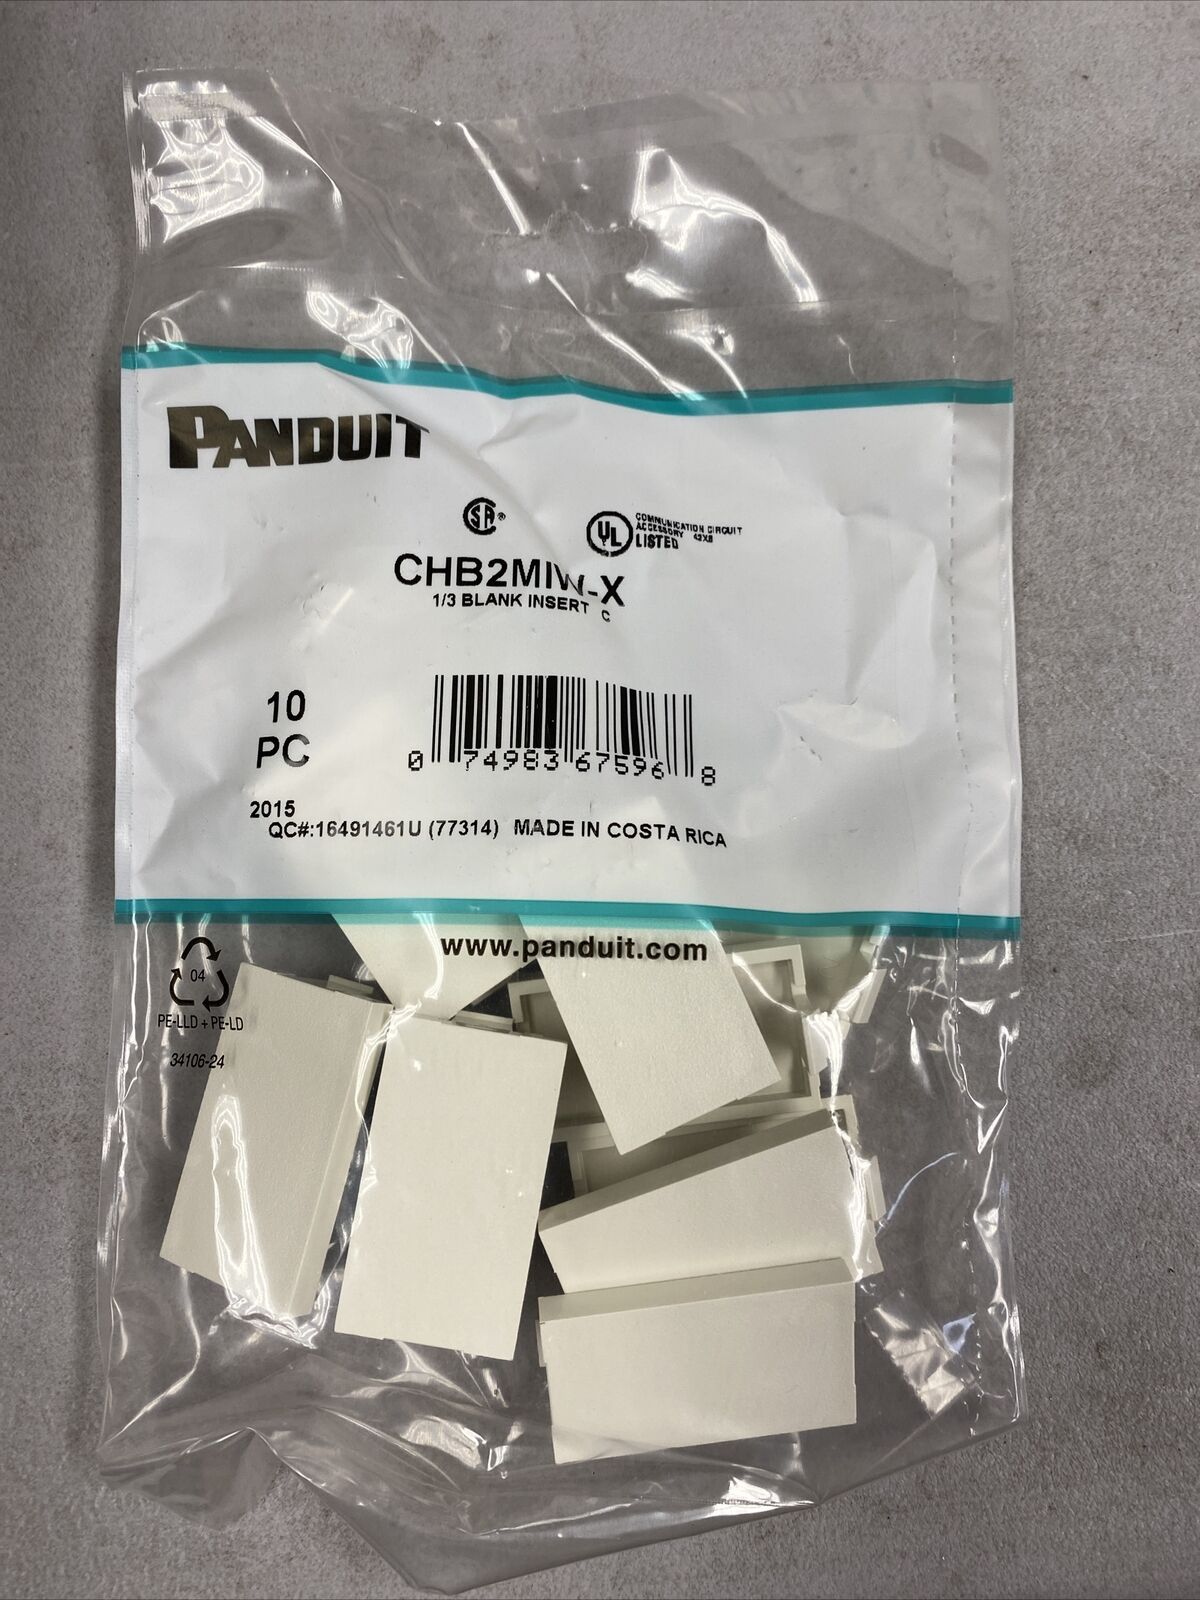 Panduit CHB2MIW-X 1/3 Blank Insert Mini-Com PAN-NET White Plastic Parts